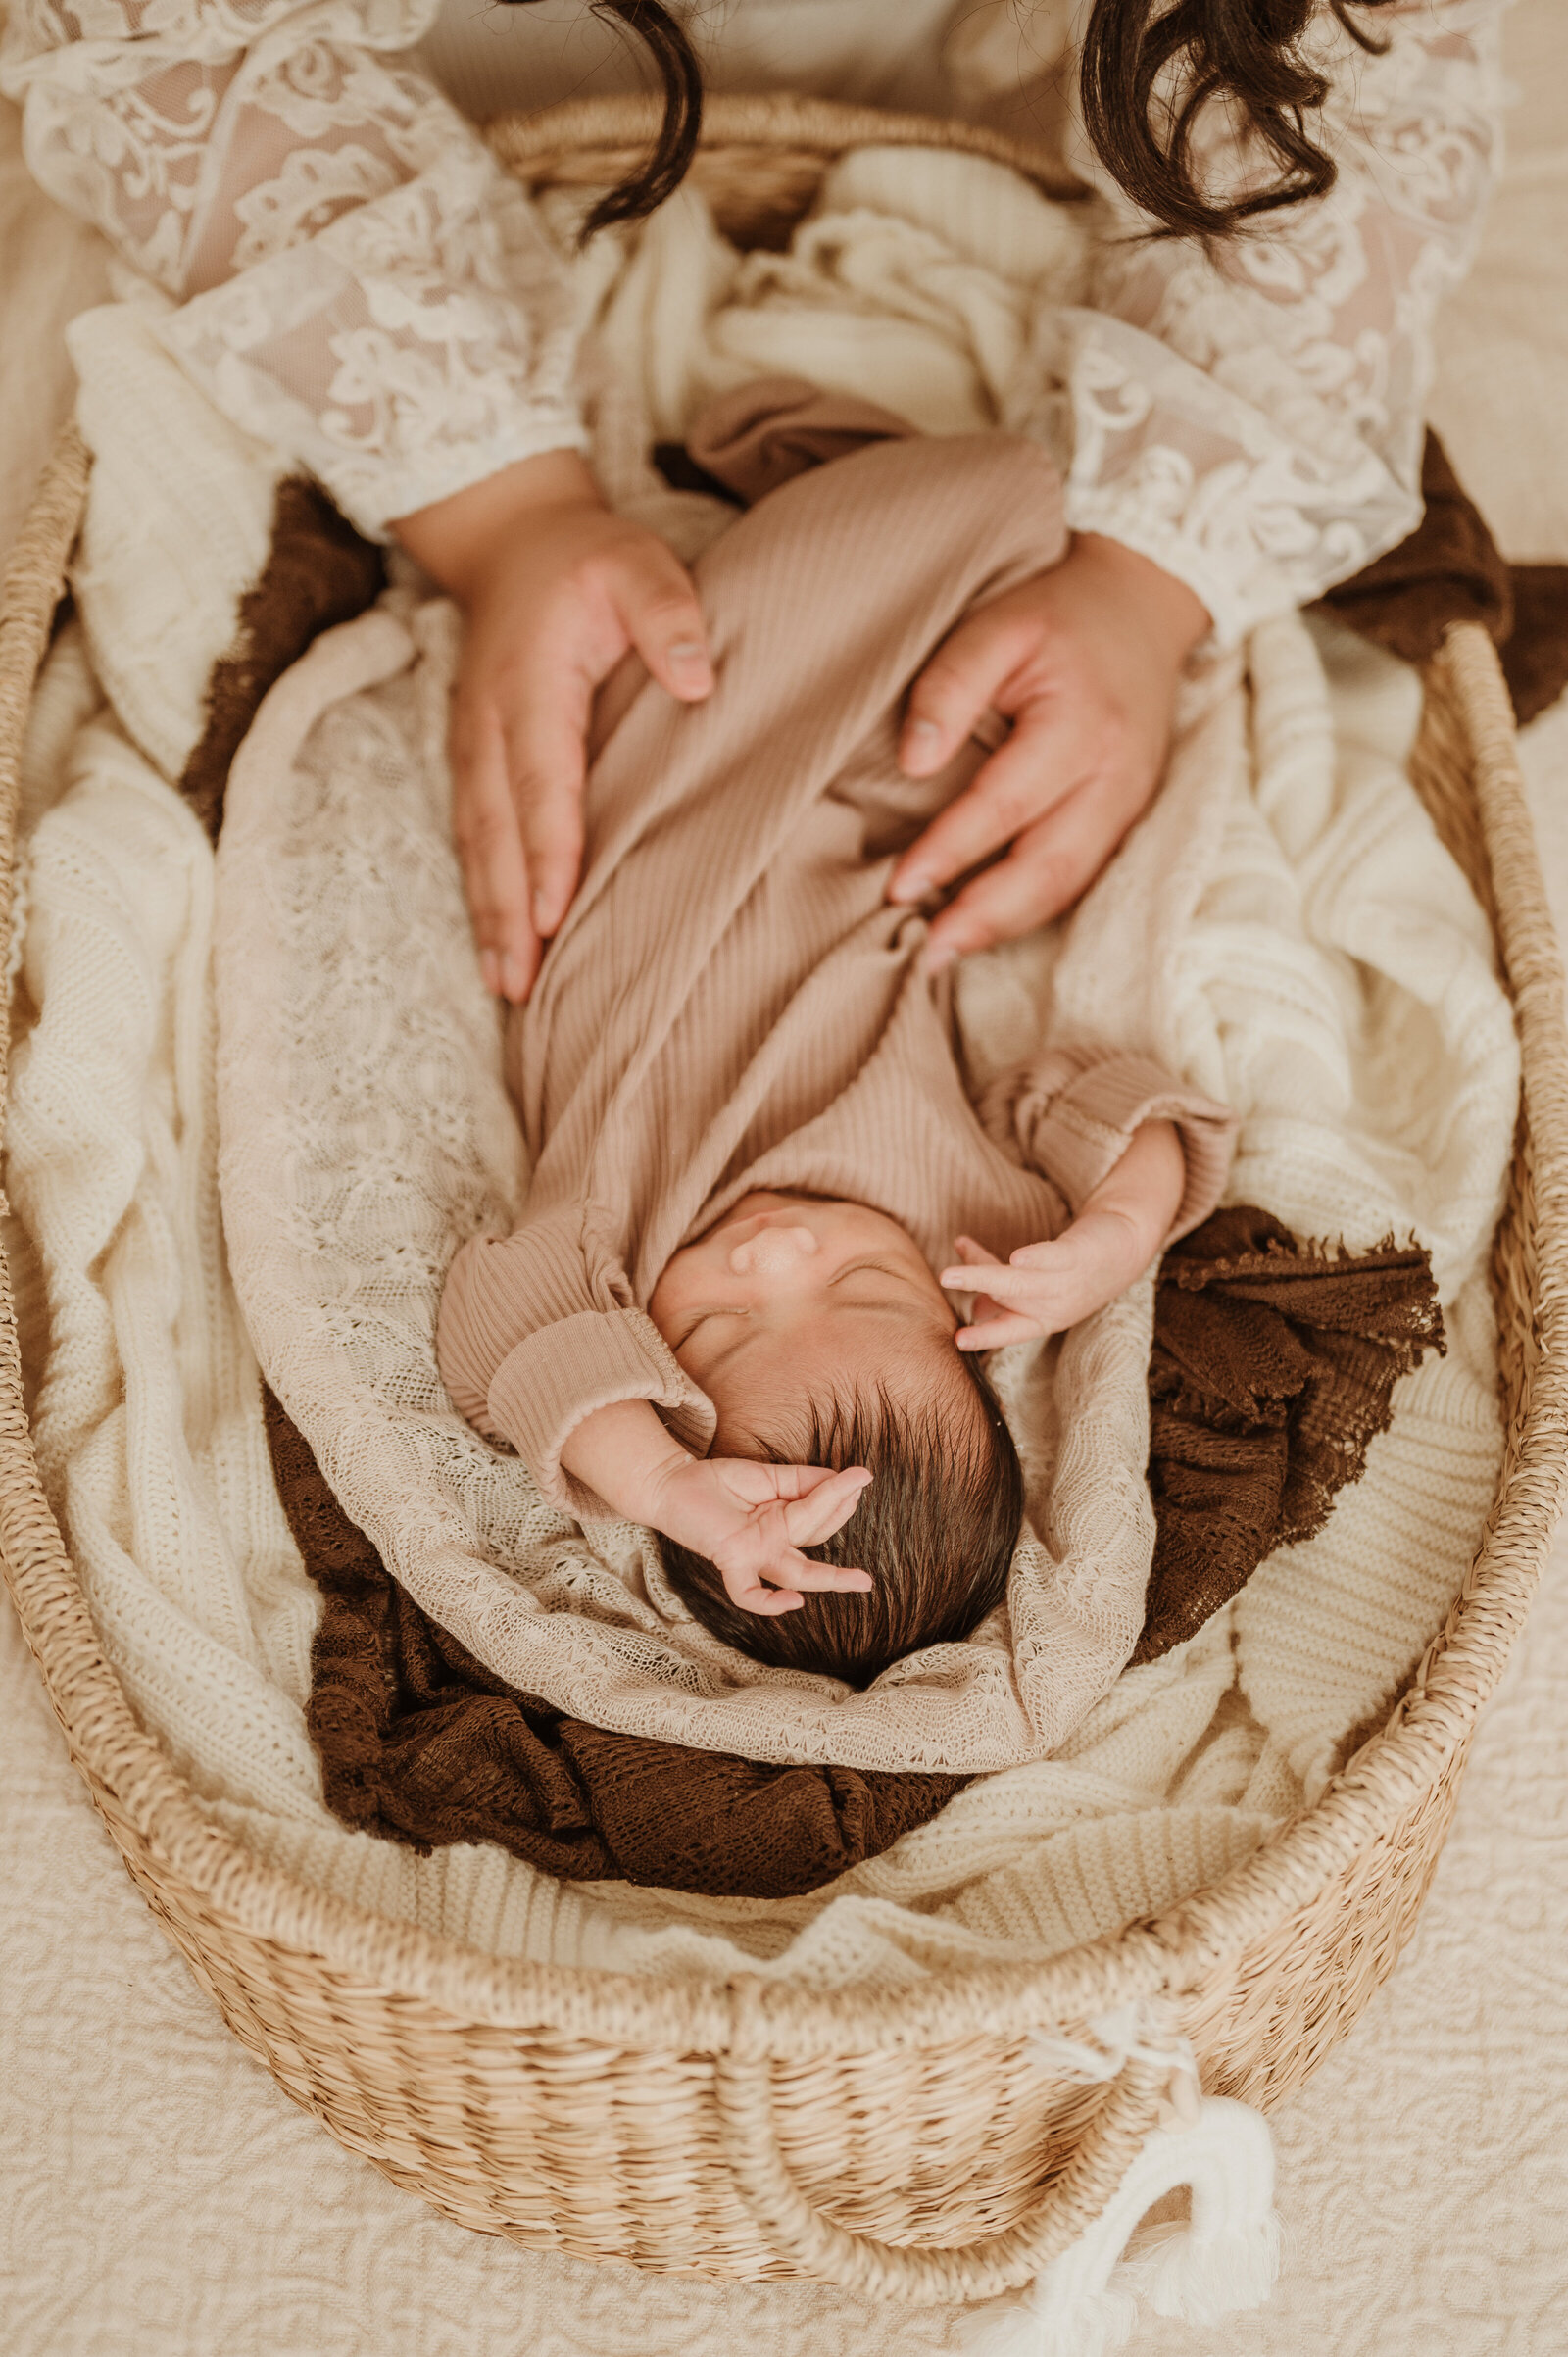 wenatchee newborn photographer - abbygale marie photography-18